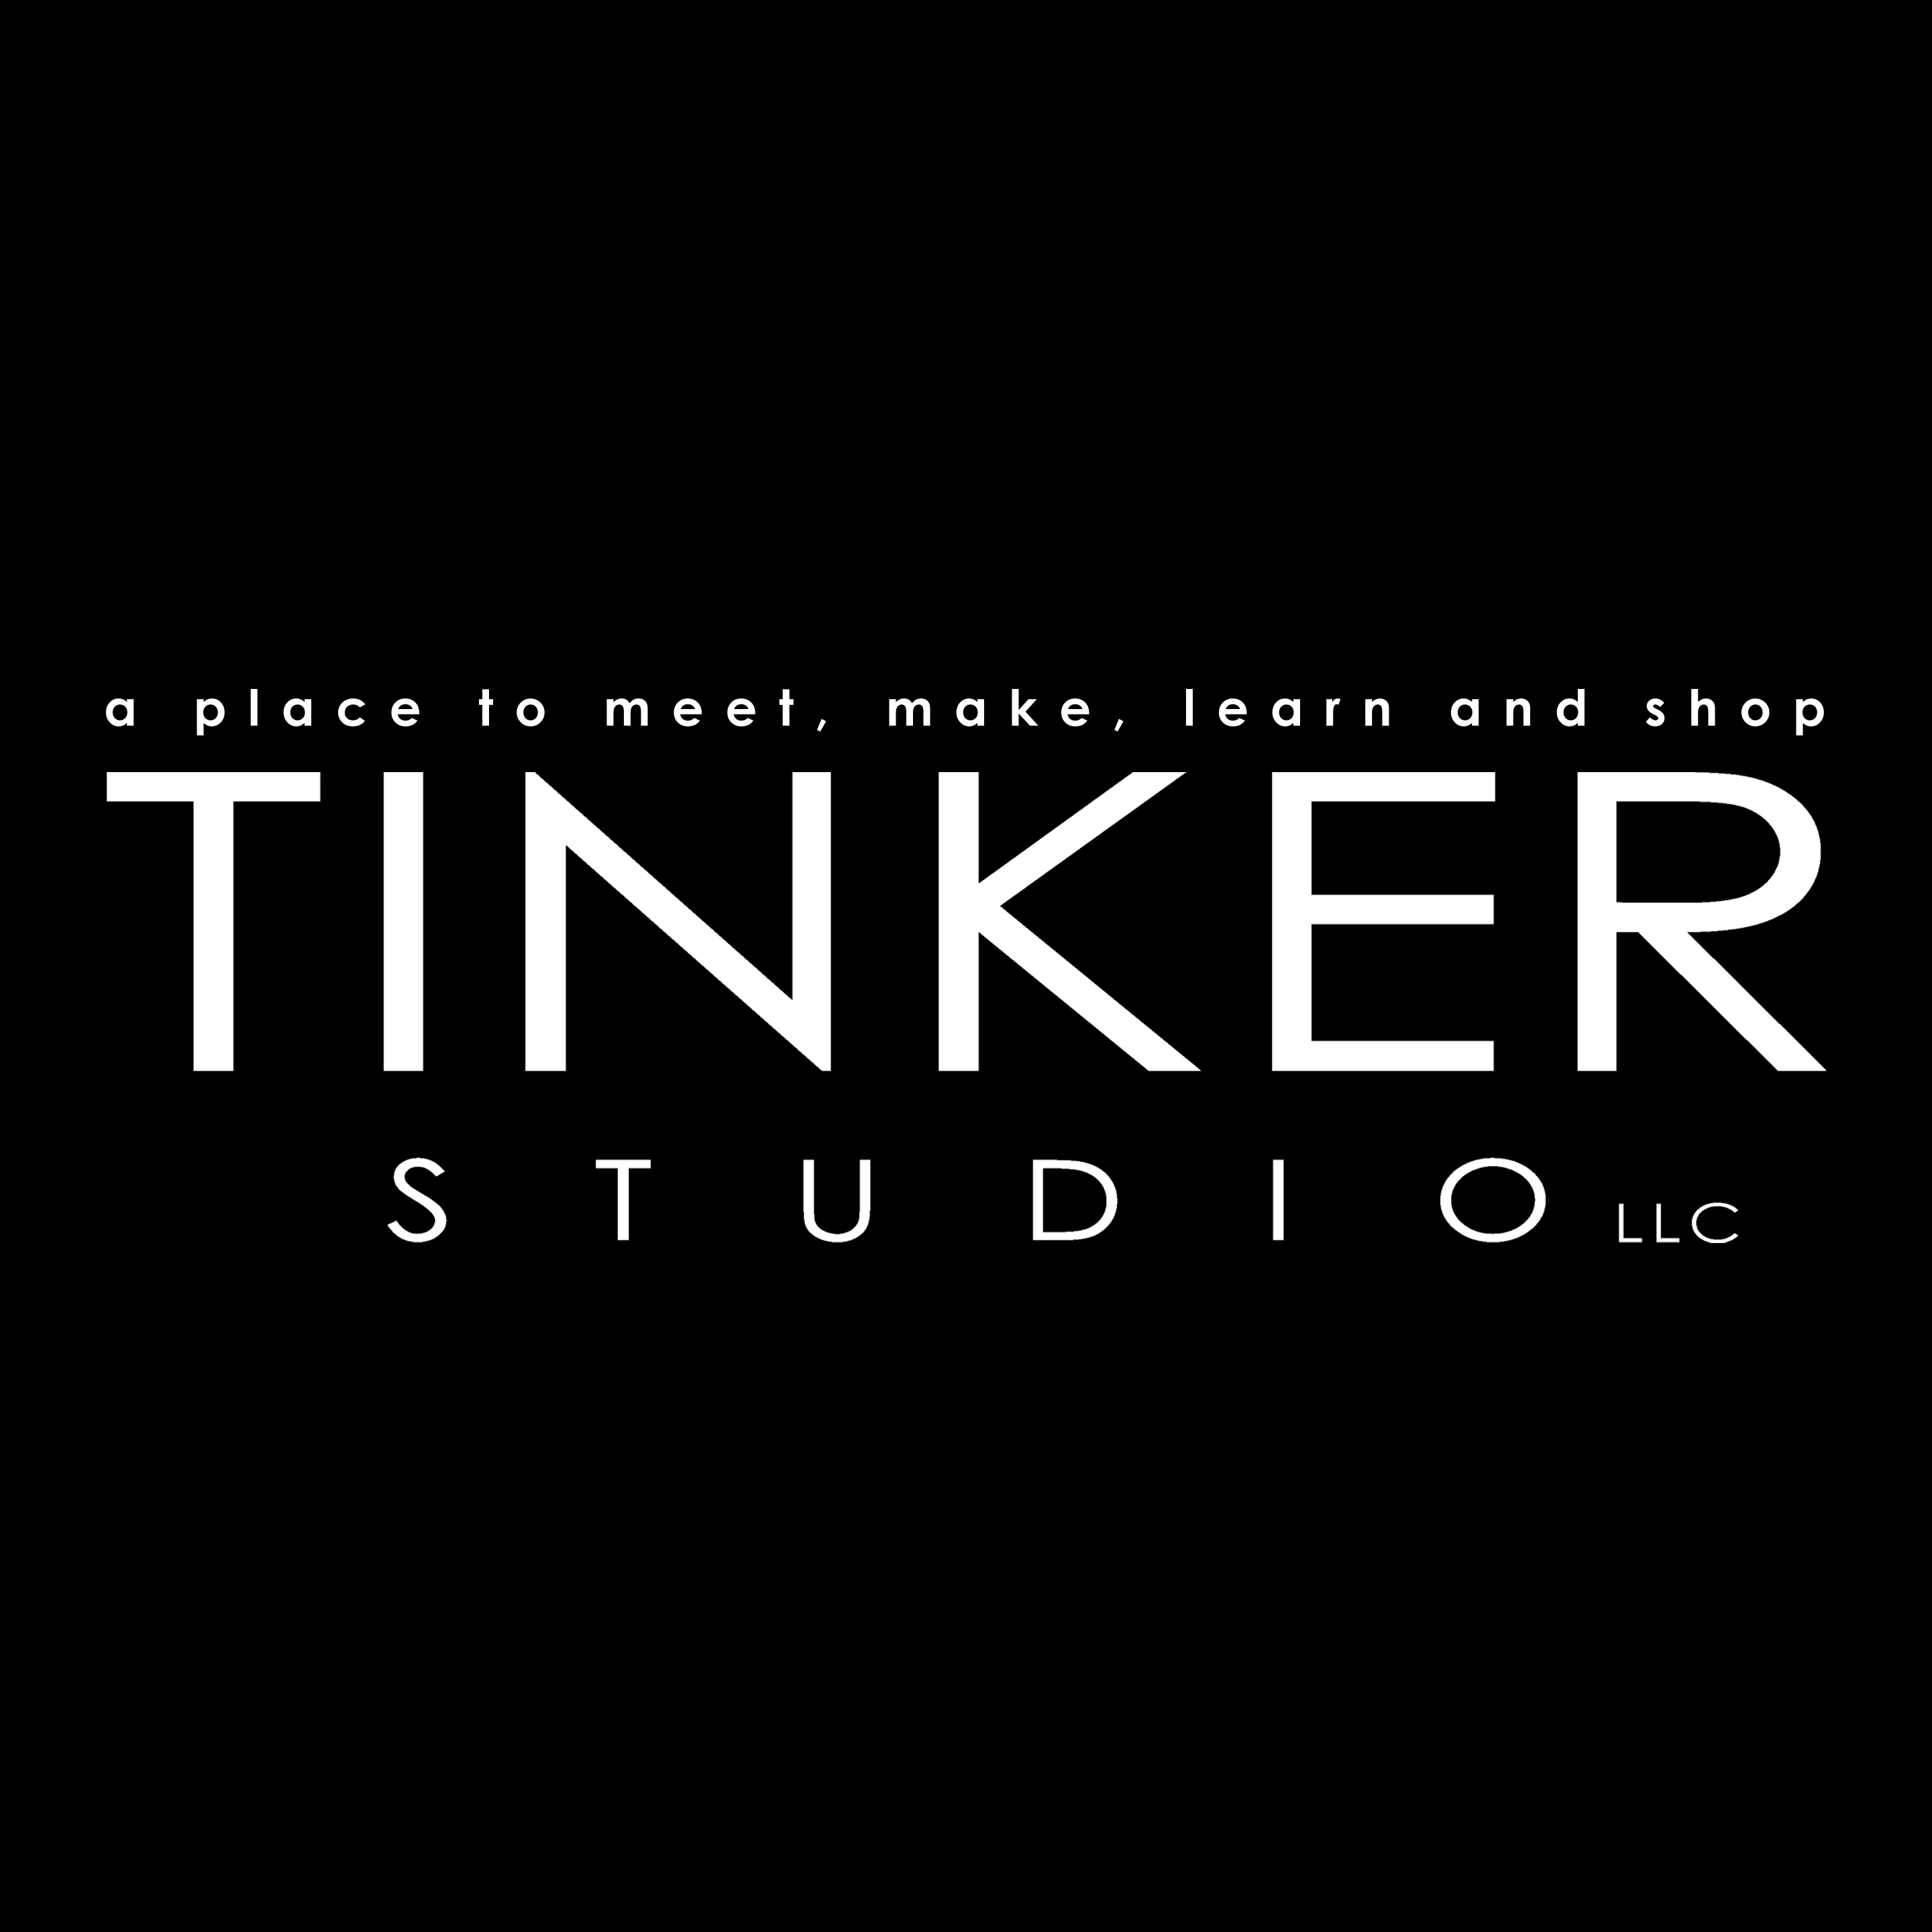 Tinker Studio LLC